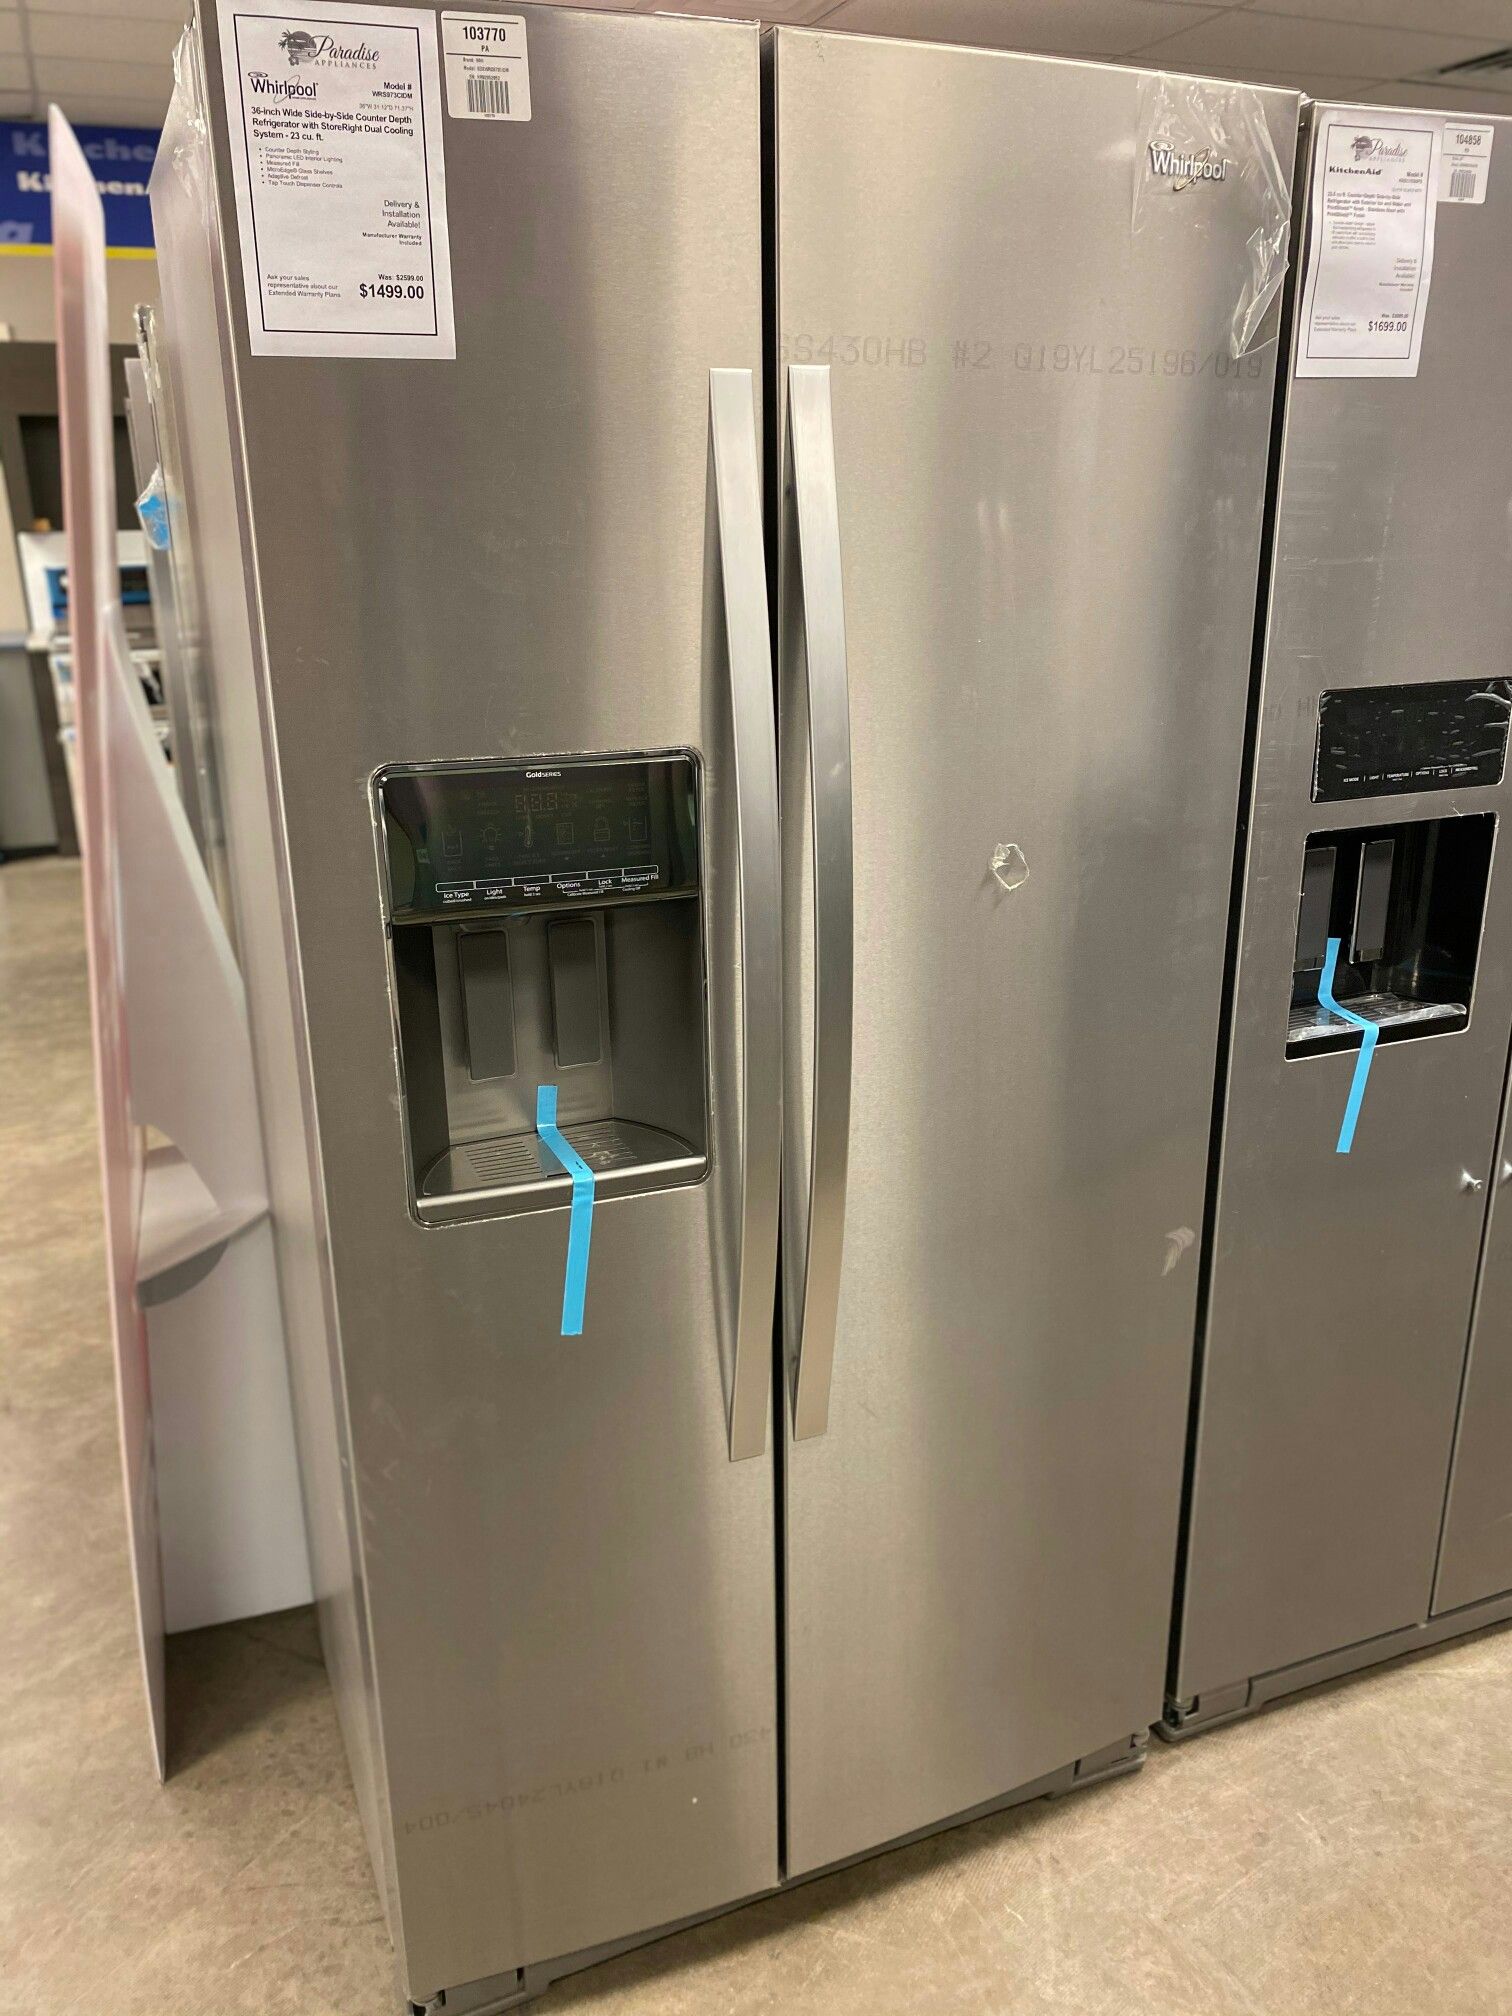 New Whirlpool Counter Depth Refrigerator w/ Duel Ice Maker 1yr Manufacturer Warranty